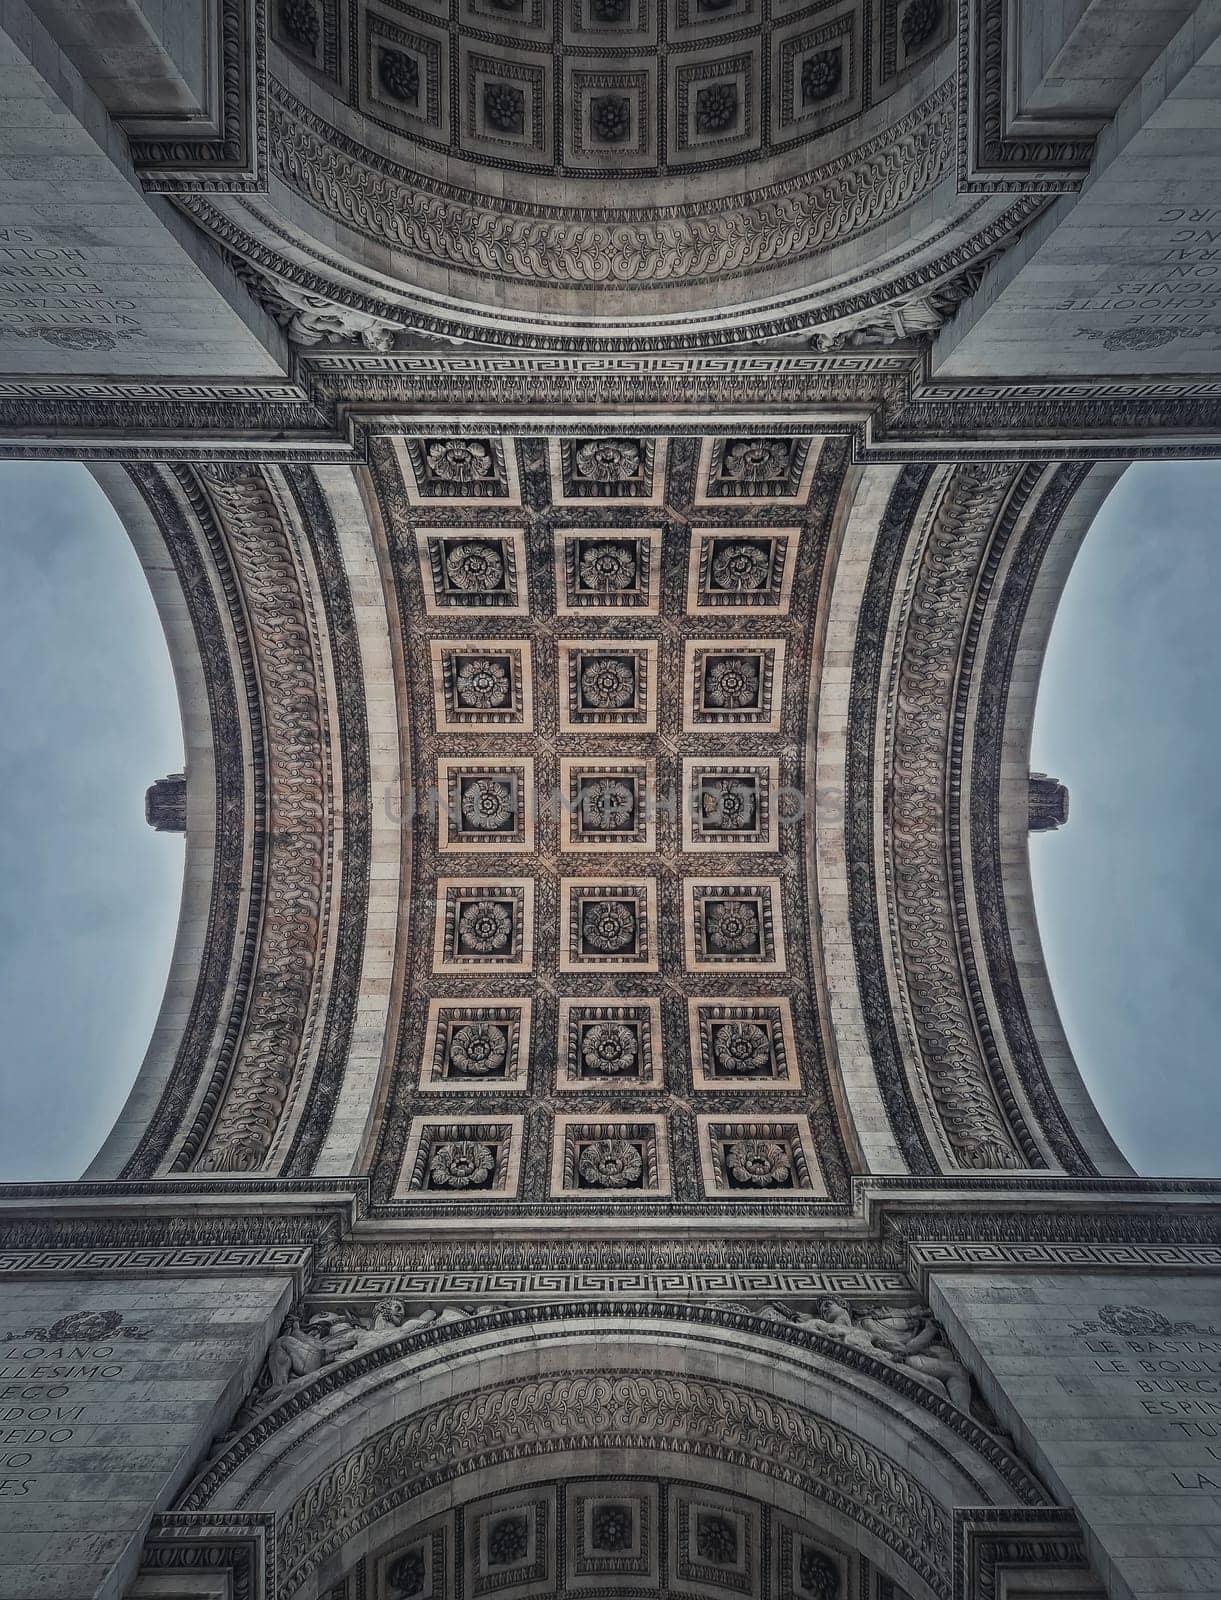 Closeup view underneath triumphal Arch, in Paris, France. Architectural details and ceiling ornate pattern of the famous Arc de triomphe landmark	